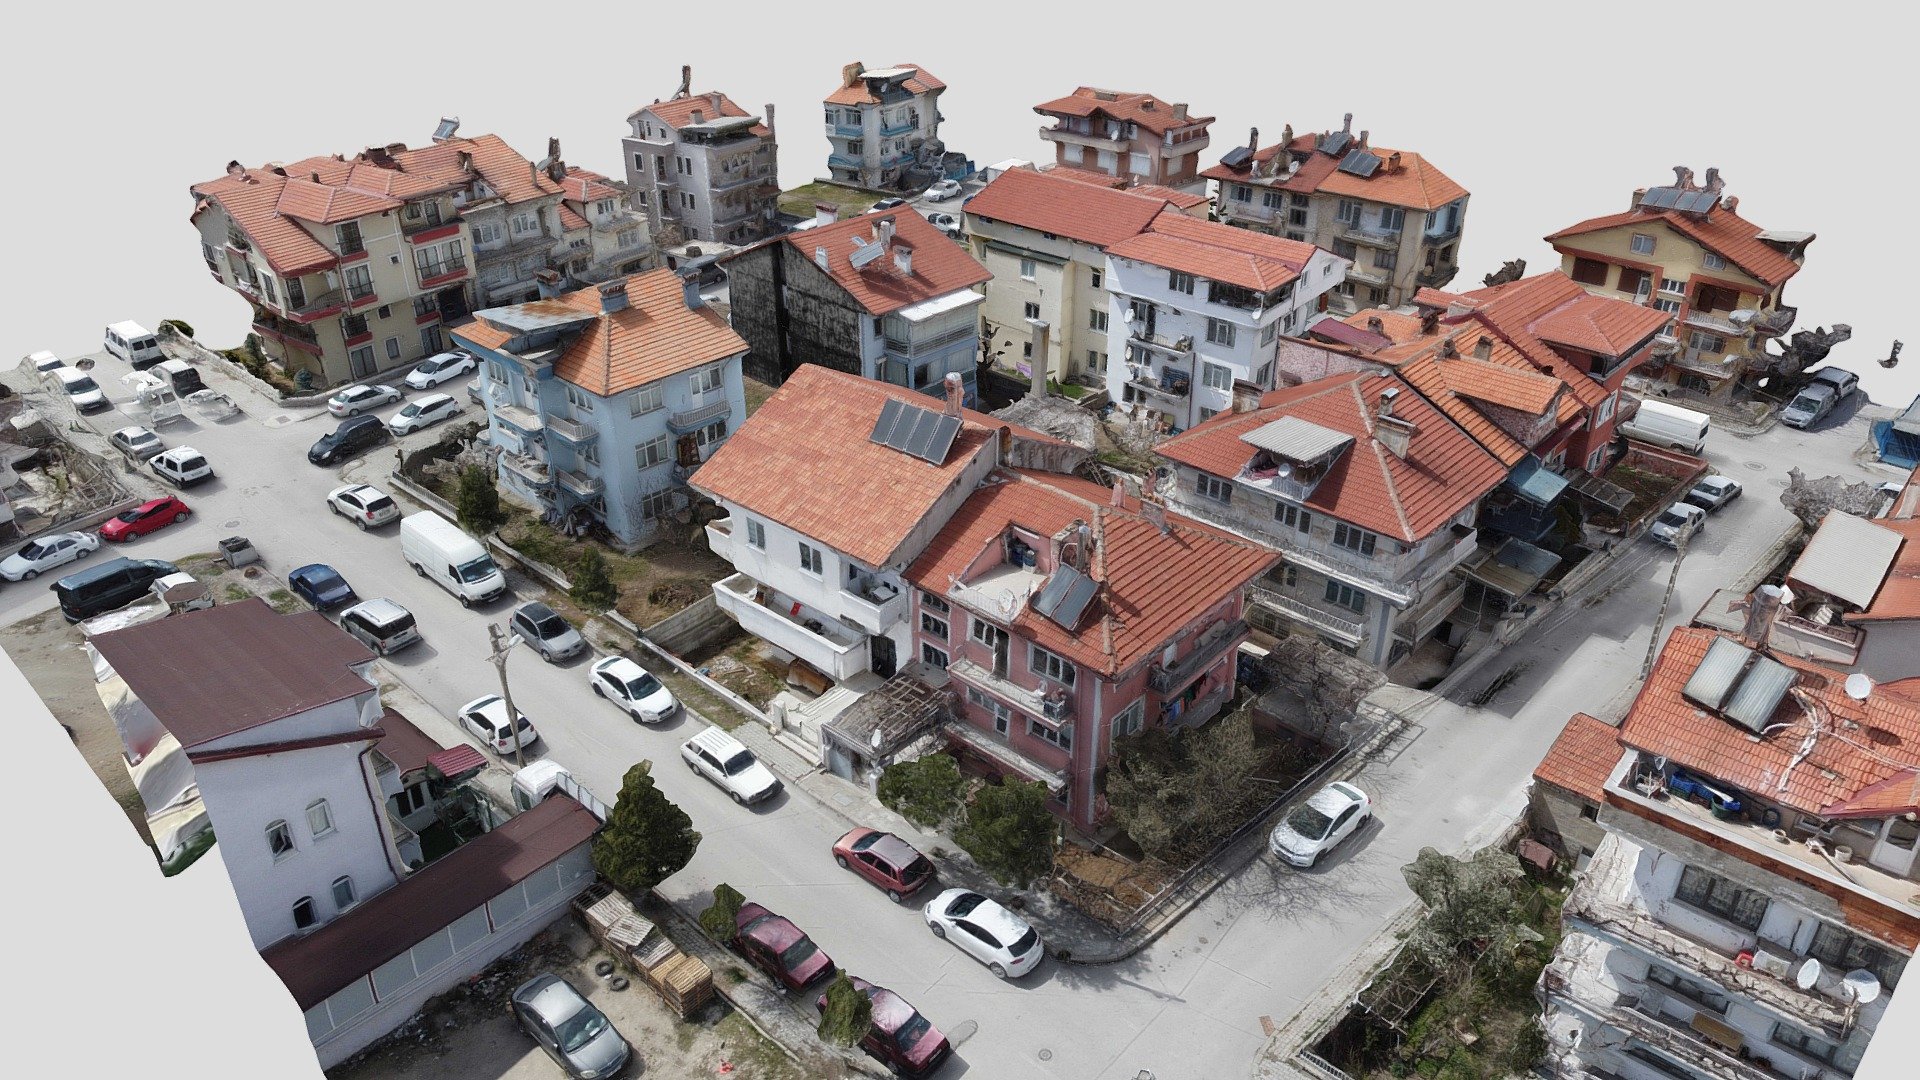 Residential block in the city of Isparta, Turkey. It is located in Bahçelievler mahallesi which means “neighborhood of the houses with gardens”. This particular block is located between 3018, 3017, 3016 and 3011 lanes. One of the buildings there is Ilksen Apart, here is it's 3D model: https://skfb.ly/o9RI6

Location: goo.gl/maps/sb2ock7sKPacJAmB8

Panorama: https://mgv25.github.io/panoramas/turkey/isparta/market-100m

557 photos on DJI Mini 2 captured on 8 April 2022

Bahçelievler, Isparta Merkez, Türkiye

Жилой квартал в Ыспарте, Турция. Район носит название Bahçelievler, что переводится как &ldquo;дома с садами